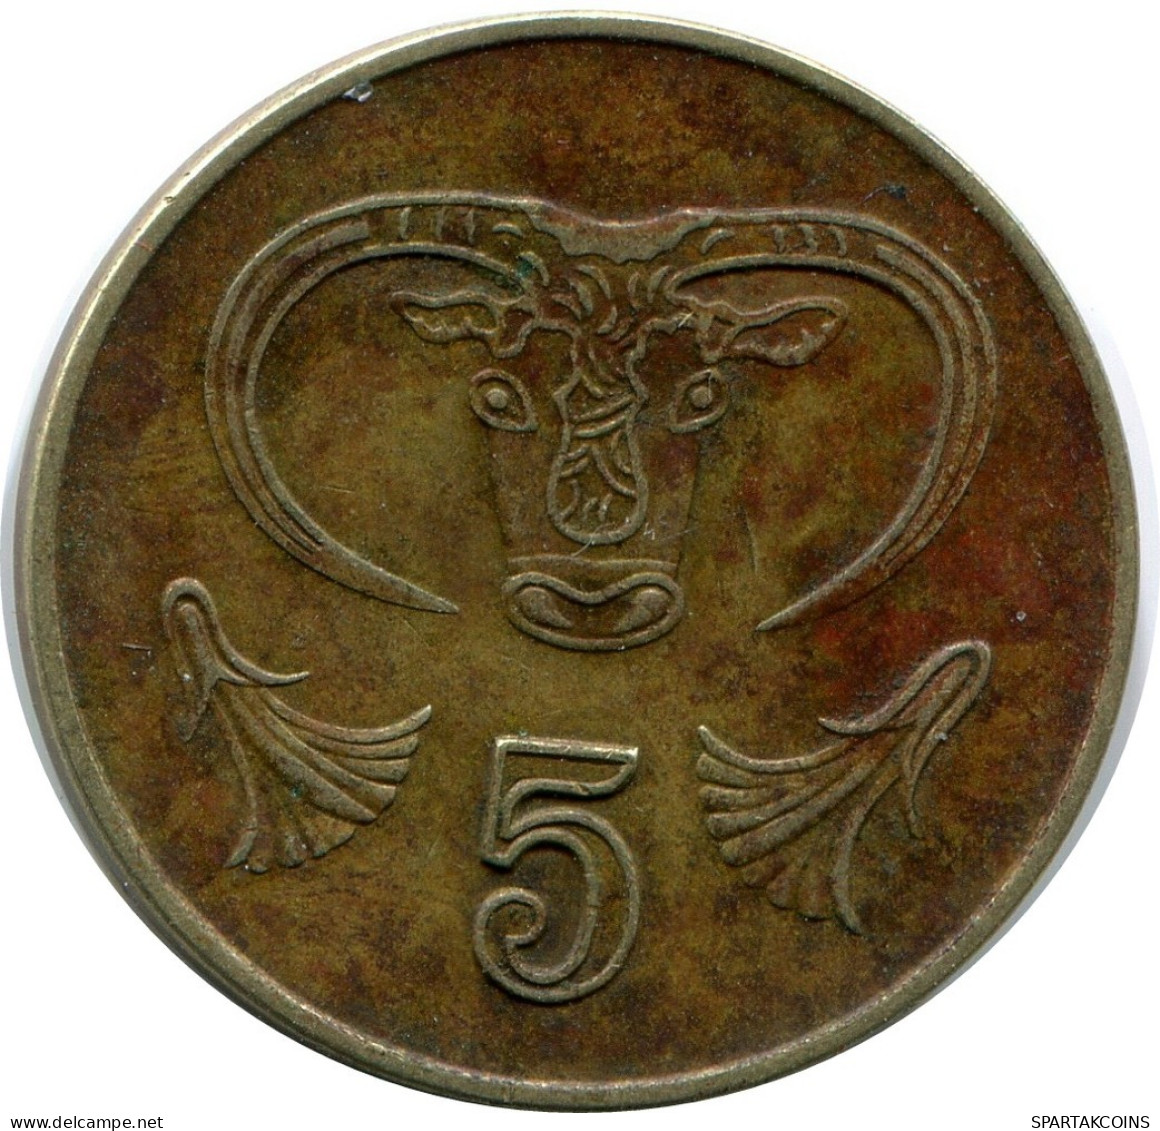 5 CENTS 1991 CYPRUS Coin #AP318.U.A - Cyprus